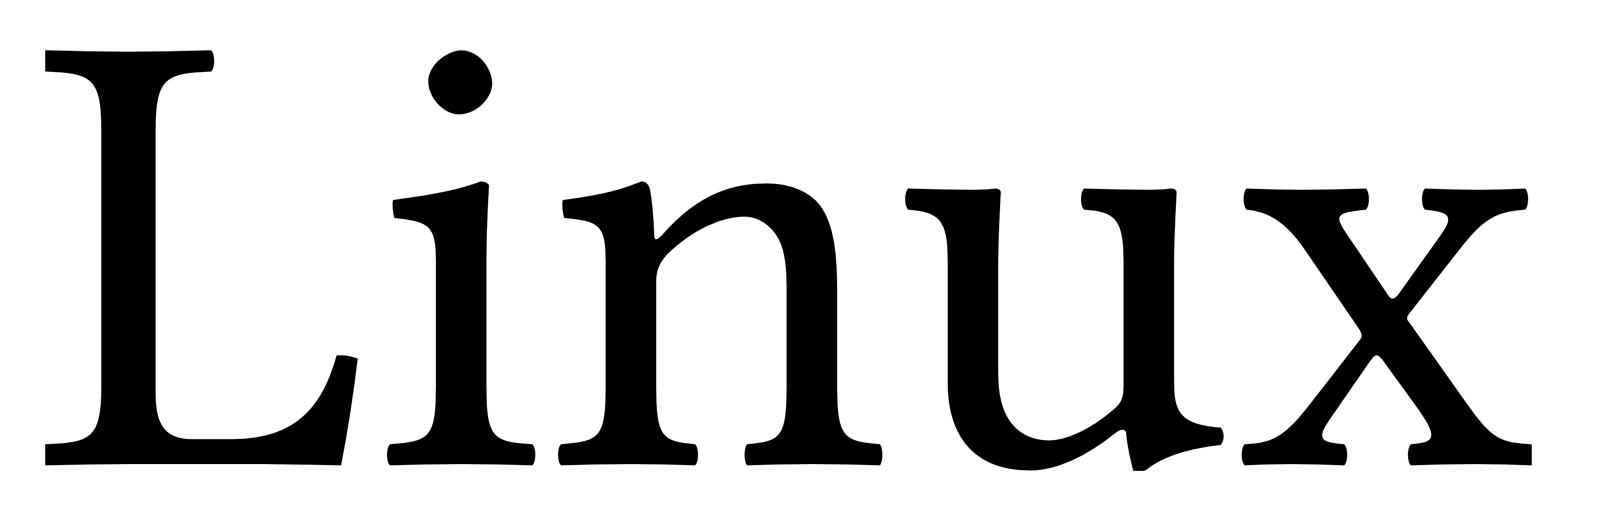 Linux logo PNG transparent image download, size: 544x720px